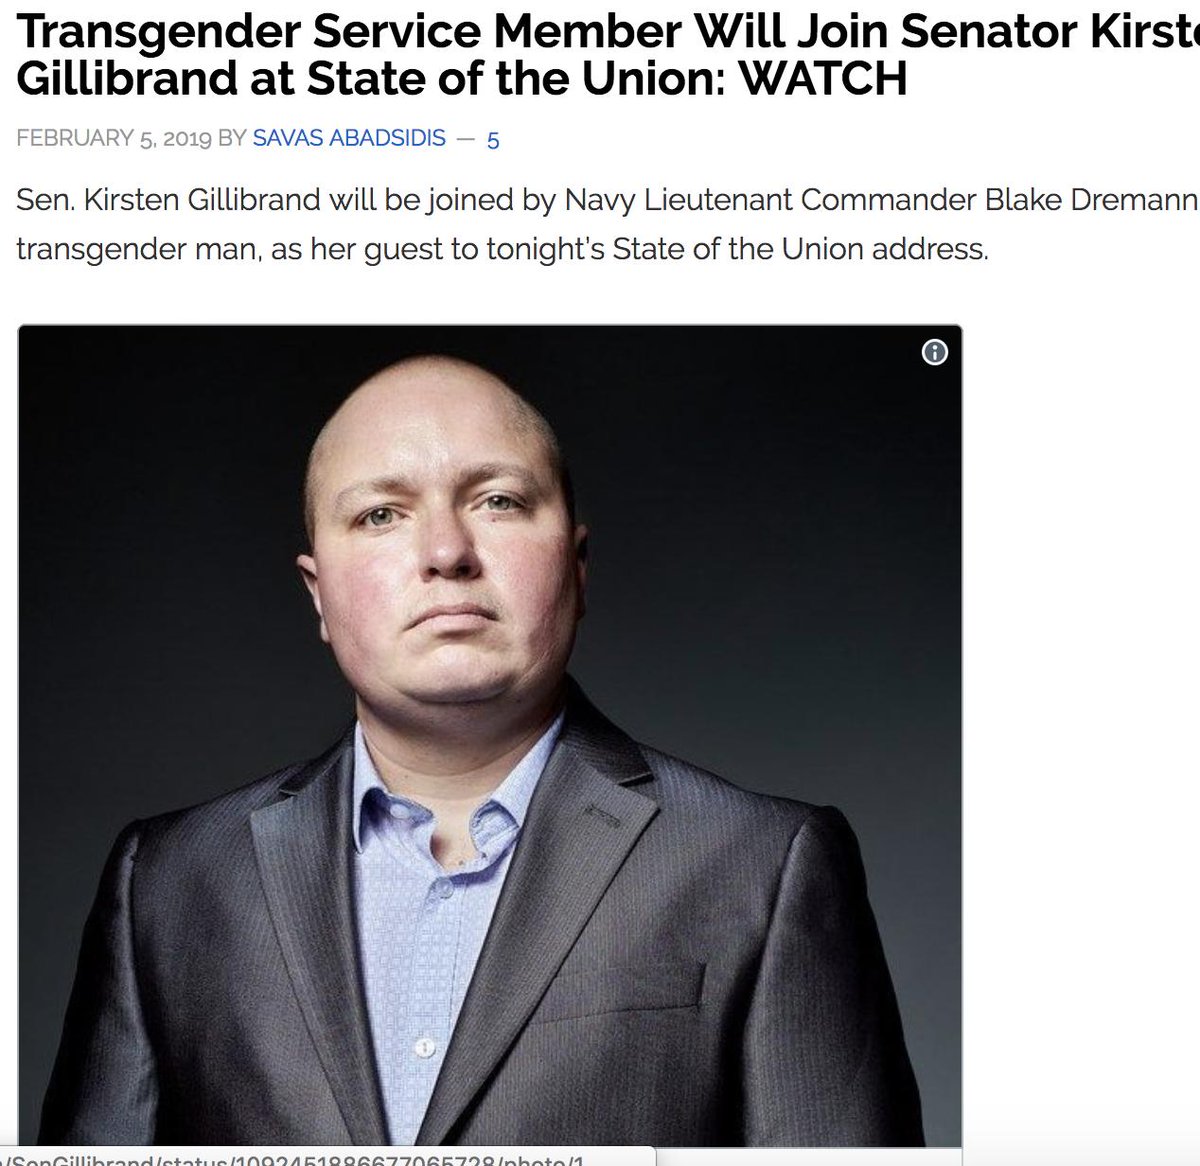 Andy Towle reports on Kirsten Gillibrand's choice of a trans service member, Lt. Commander Blake Dremann as her State of the Union guest.  http://www.towleroad.com/2019/02/transgender-4/?fbclid=IwAR0e-MKYE12NE7plSvgq6_LiGTpdqSIbp9OhCw5Ja2kZcV5LhVoavMoeVgI